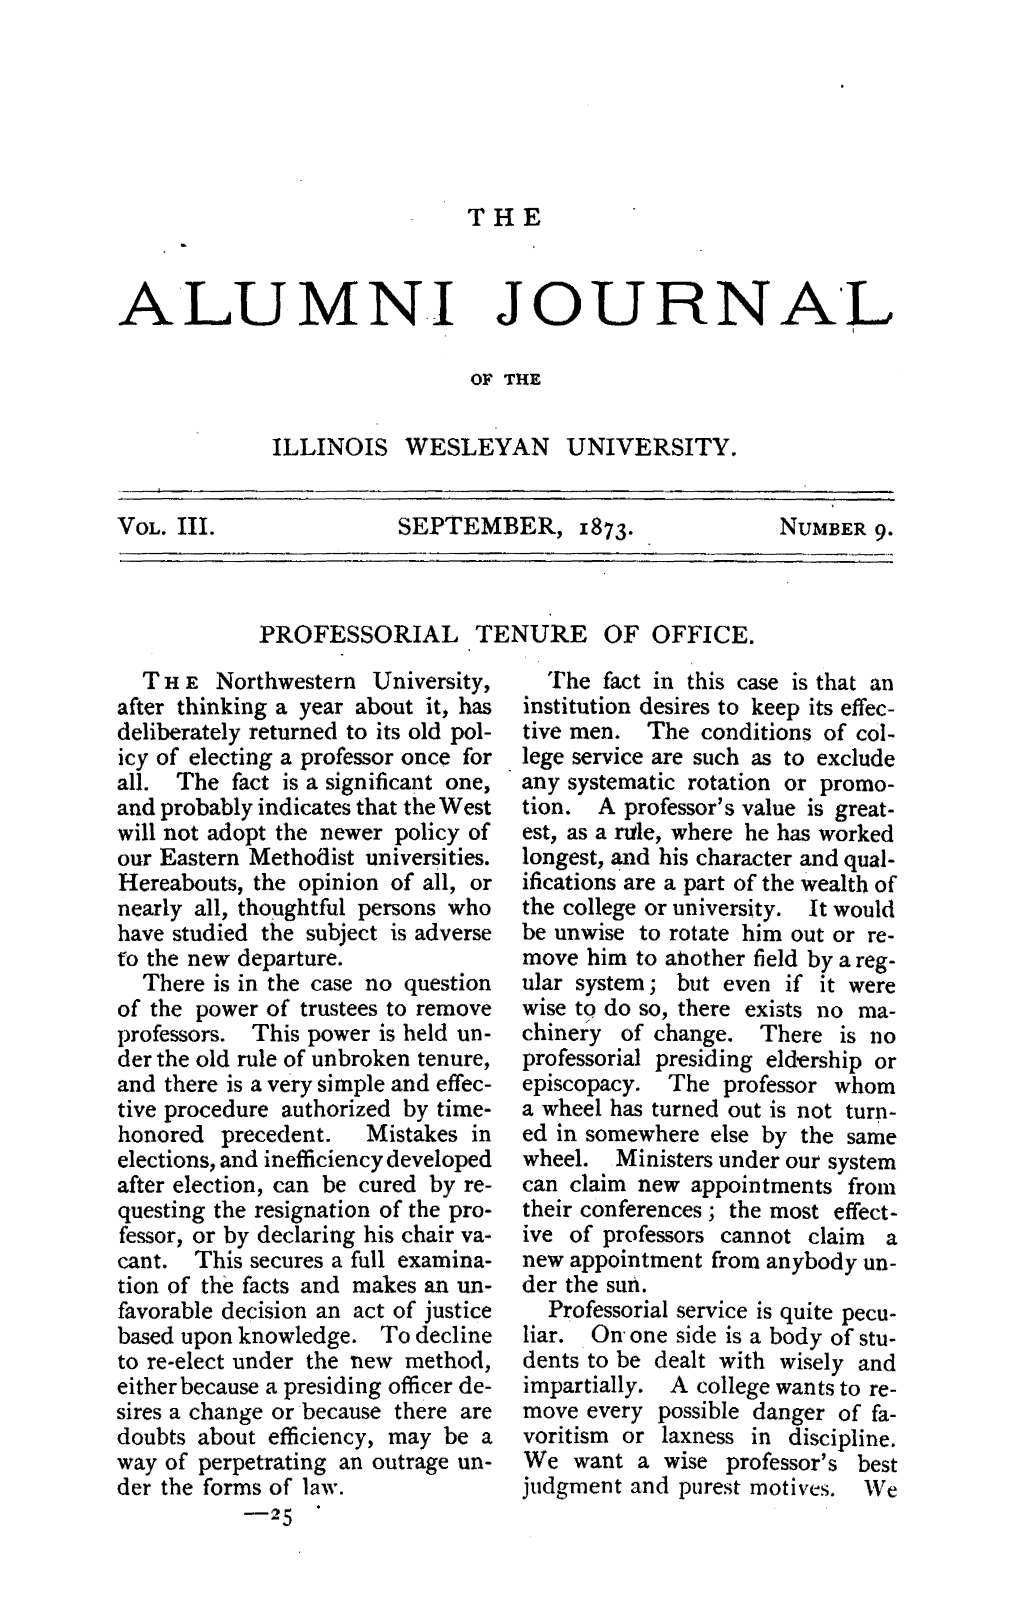 Alumni Journal